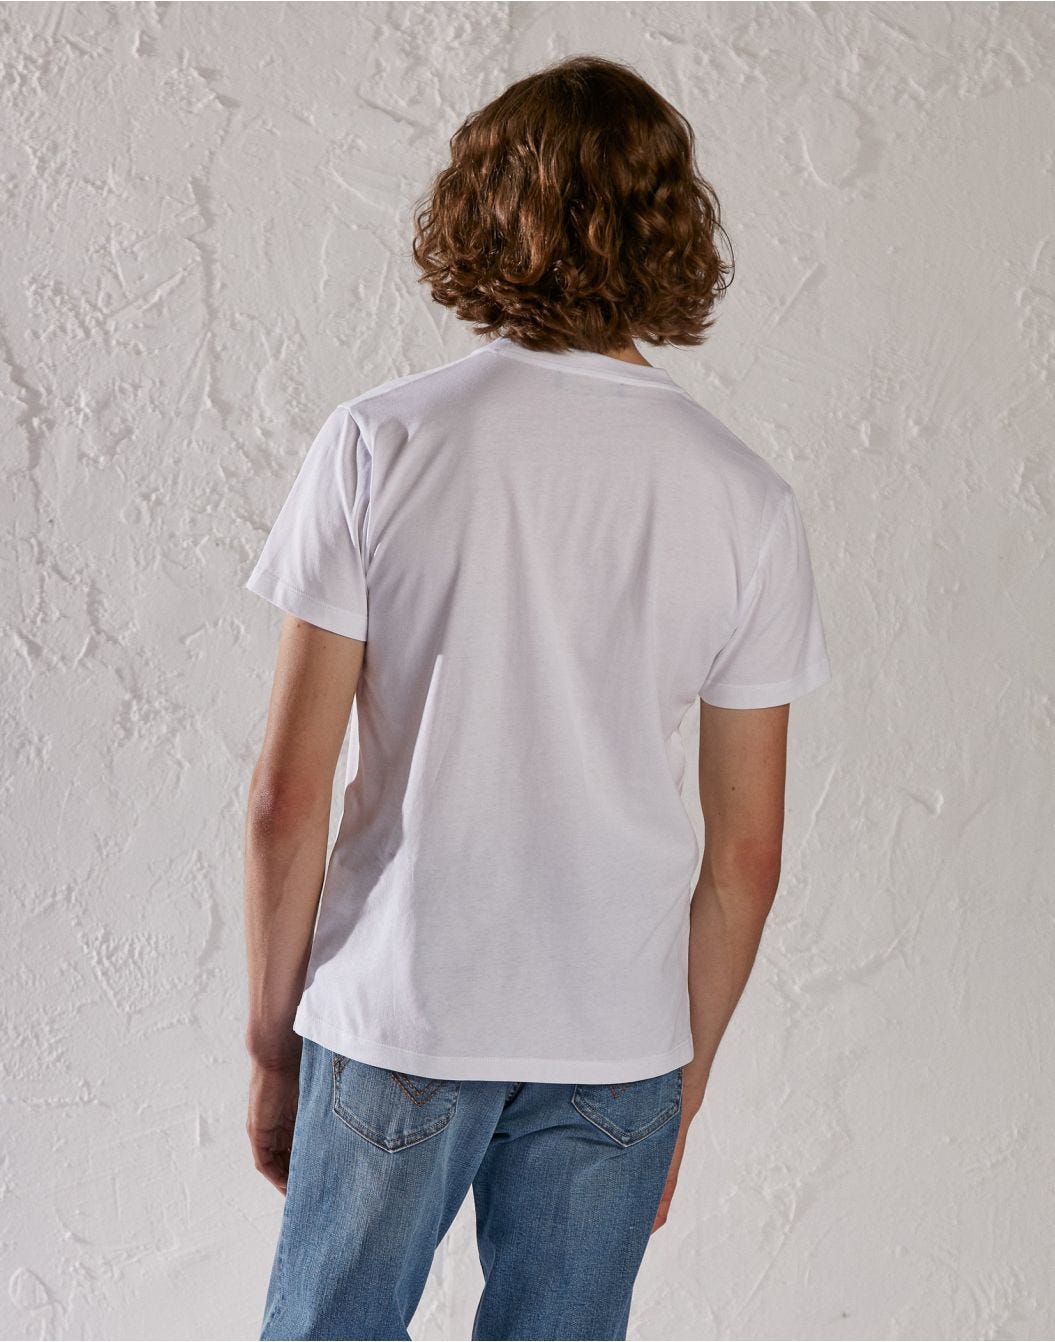 Jersey V-neck white T-shirt